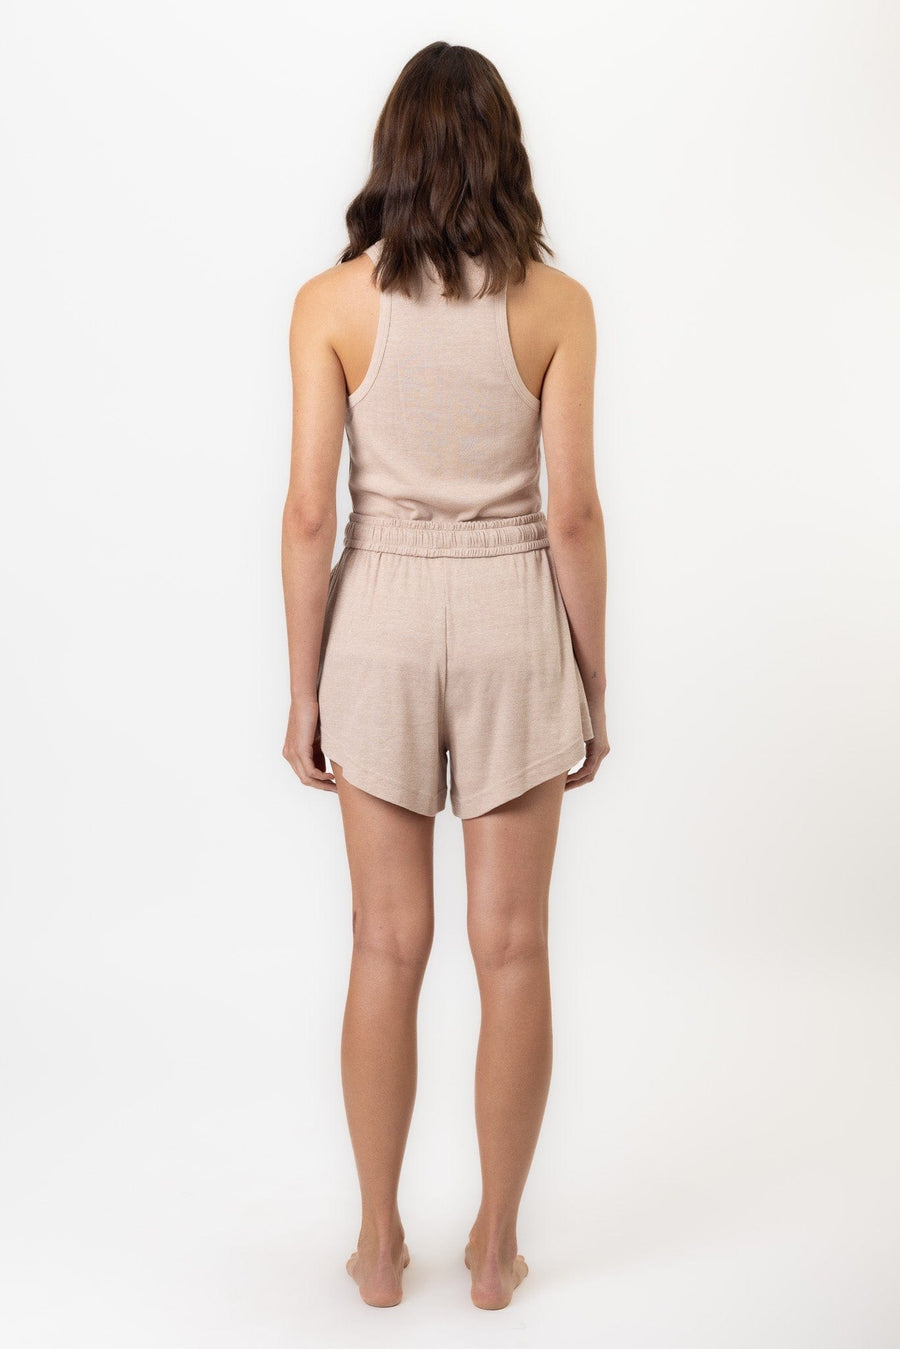 Tulip Short | Beige Tulip Shorts Lounge Shorts Pajamas Australia Online | Reverie the Label  SHORTS Tulip Short